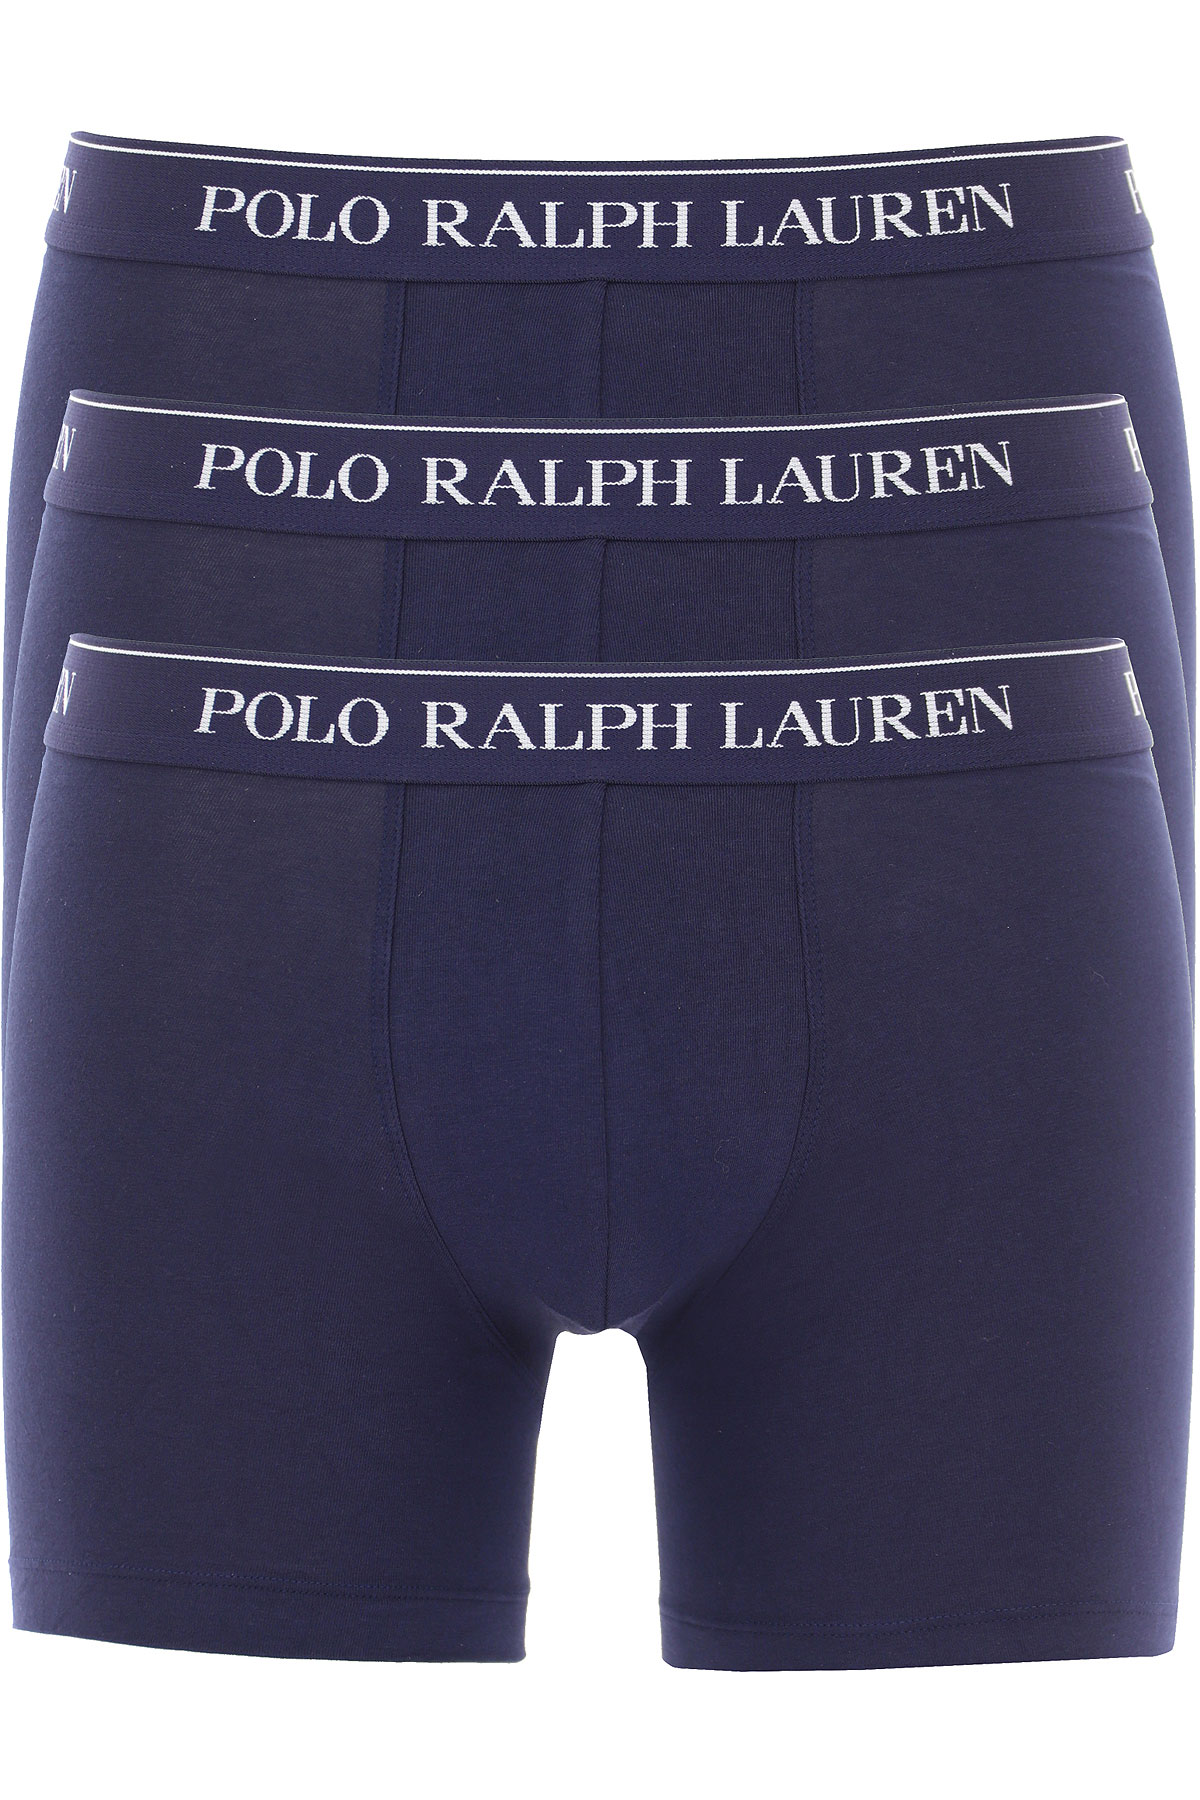 Mens Underwear Ralph Lauren, Style code: 714835887001--